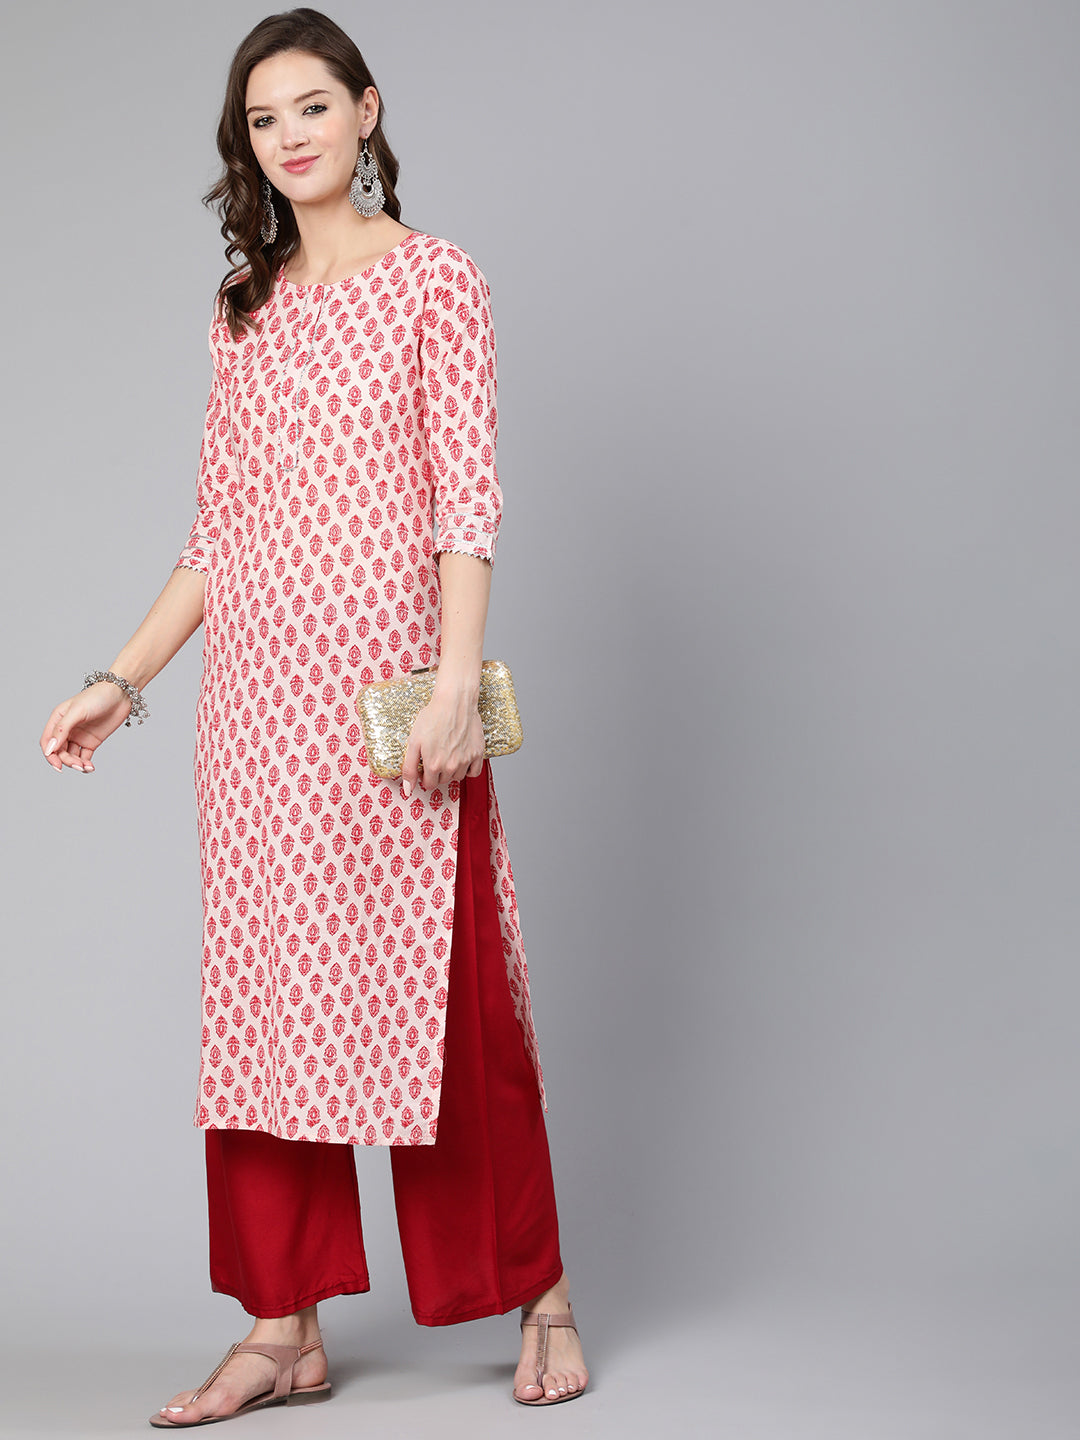 Kirtan Amayra Fancy Designer Ethnic Wear Rayon Anarkali Long Kurti  Collection - The Ethnic World